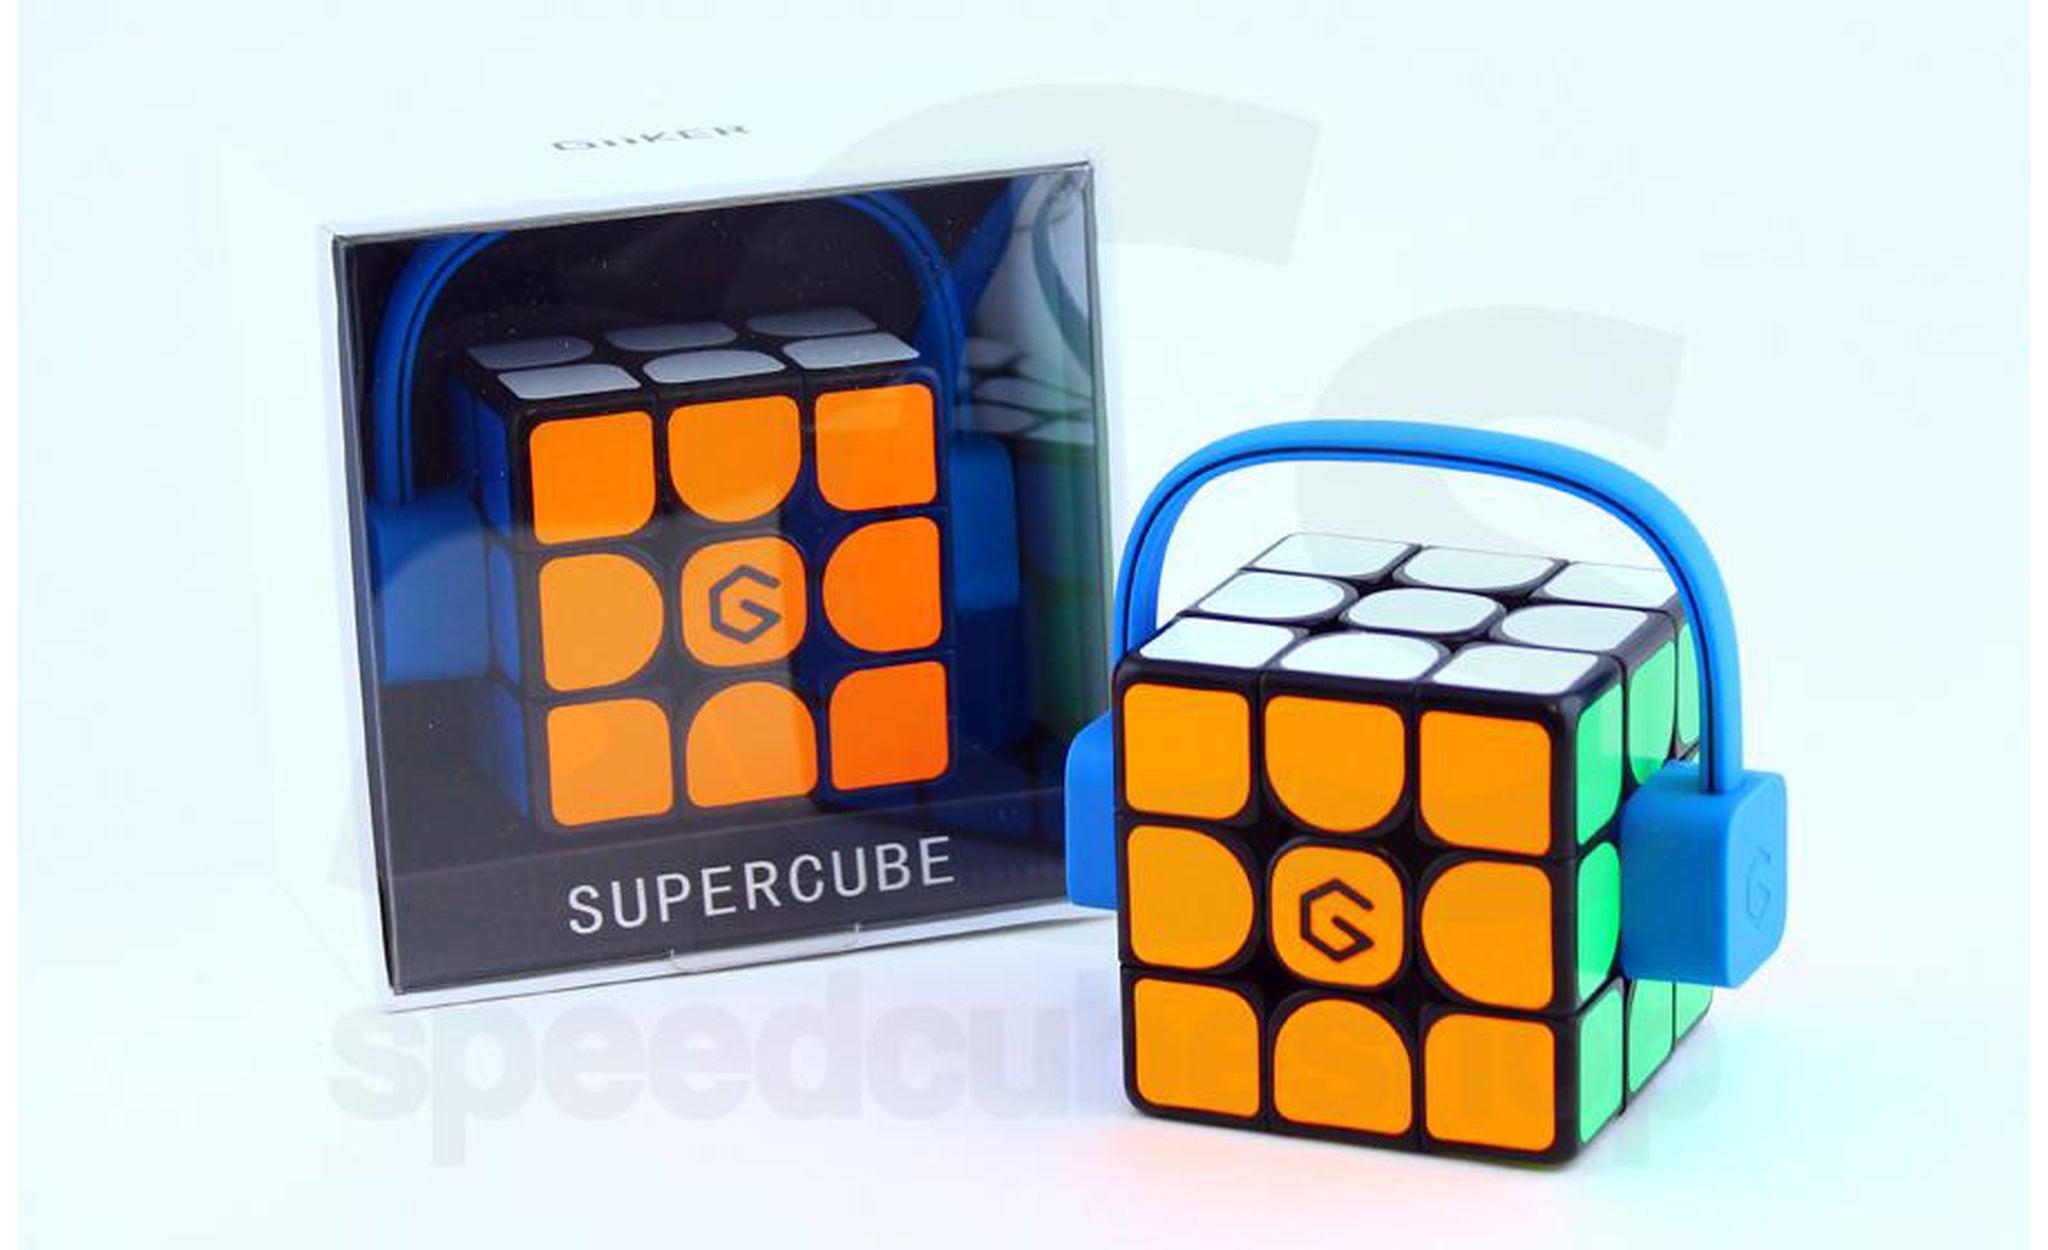 Кубик Рубика Giiker super Cube i3. Таймер для кубика Рубика. Кубик Рубика Xiaomi Giiker m3 3x3x3 (Сяоми Гикер м3 3х3х3). Кубик Рубика Сяоми Гикер i3s.